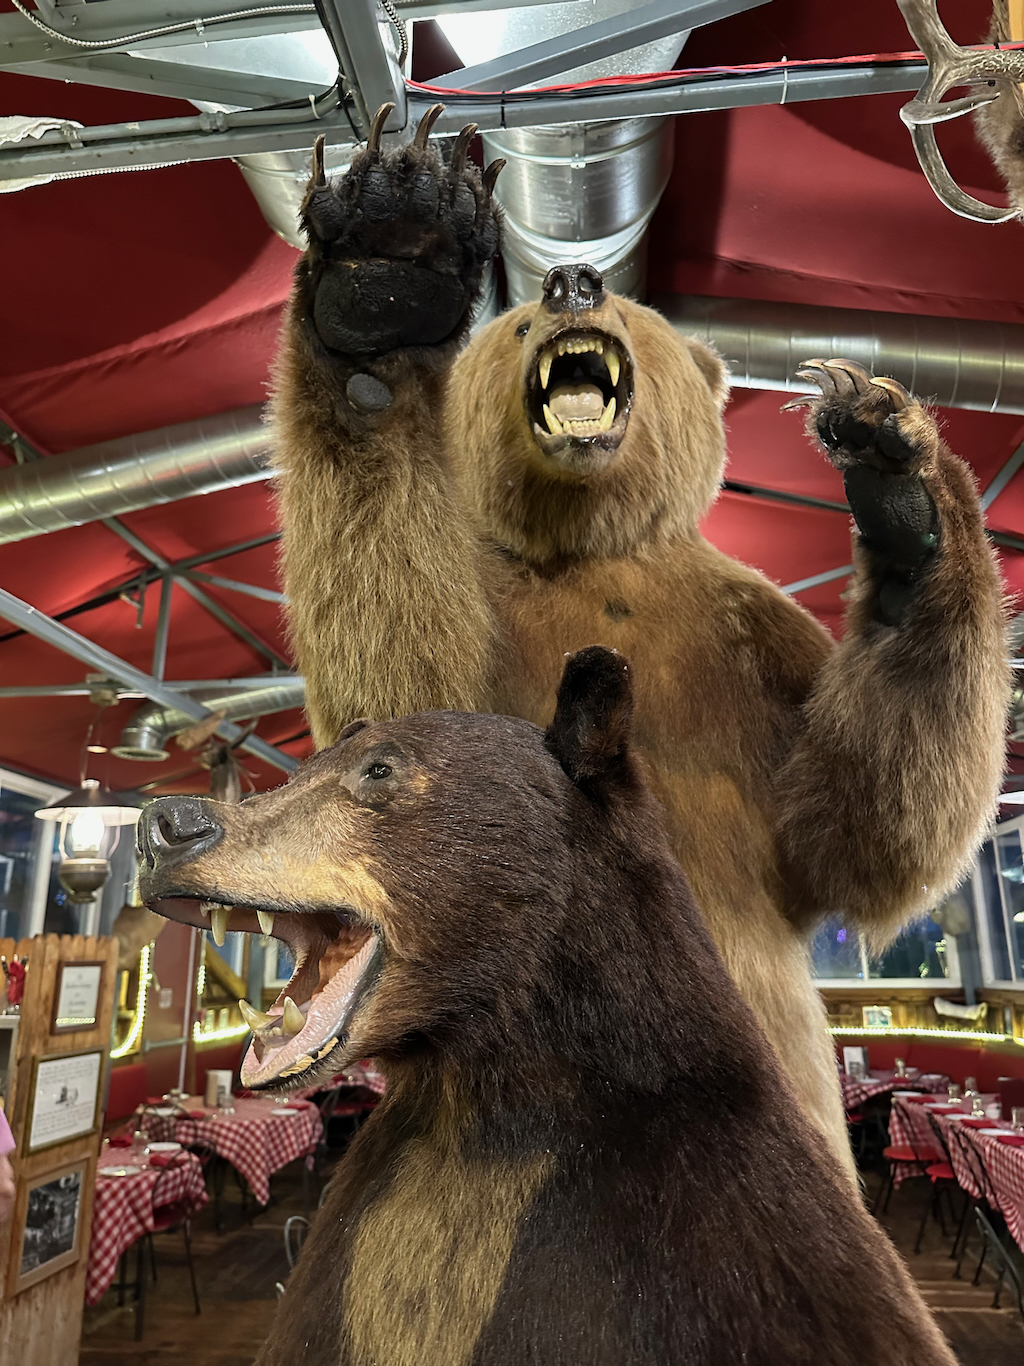 A stuffed bears in a restaurant